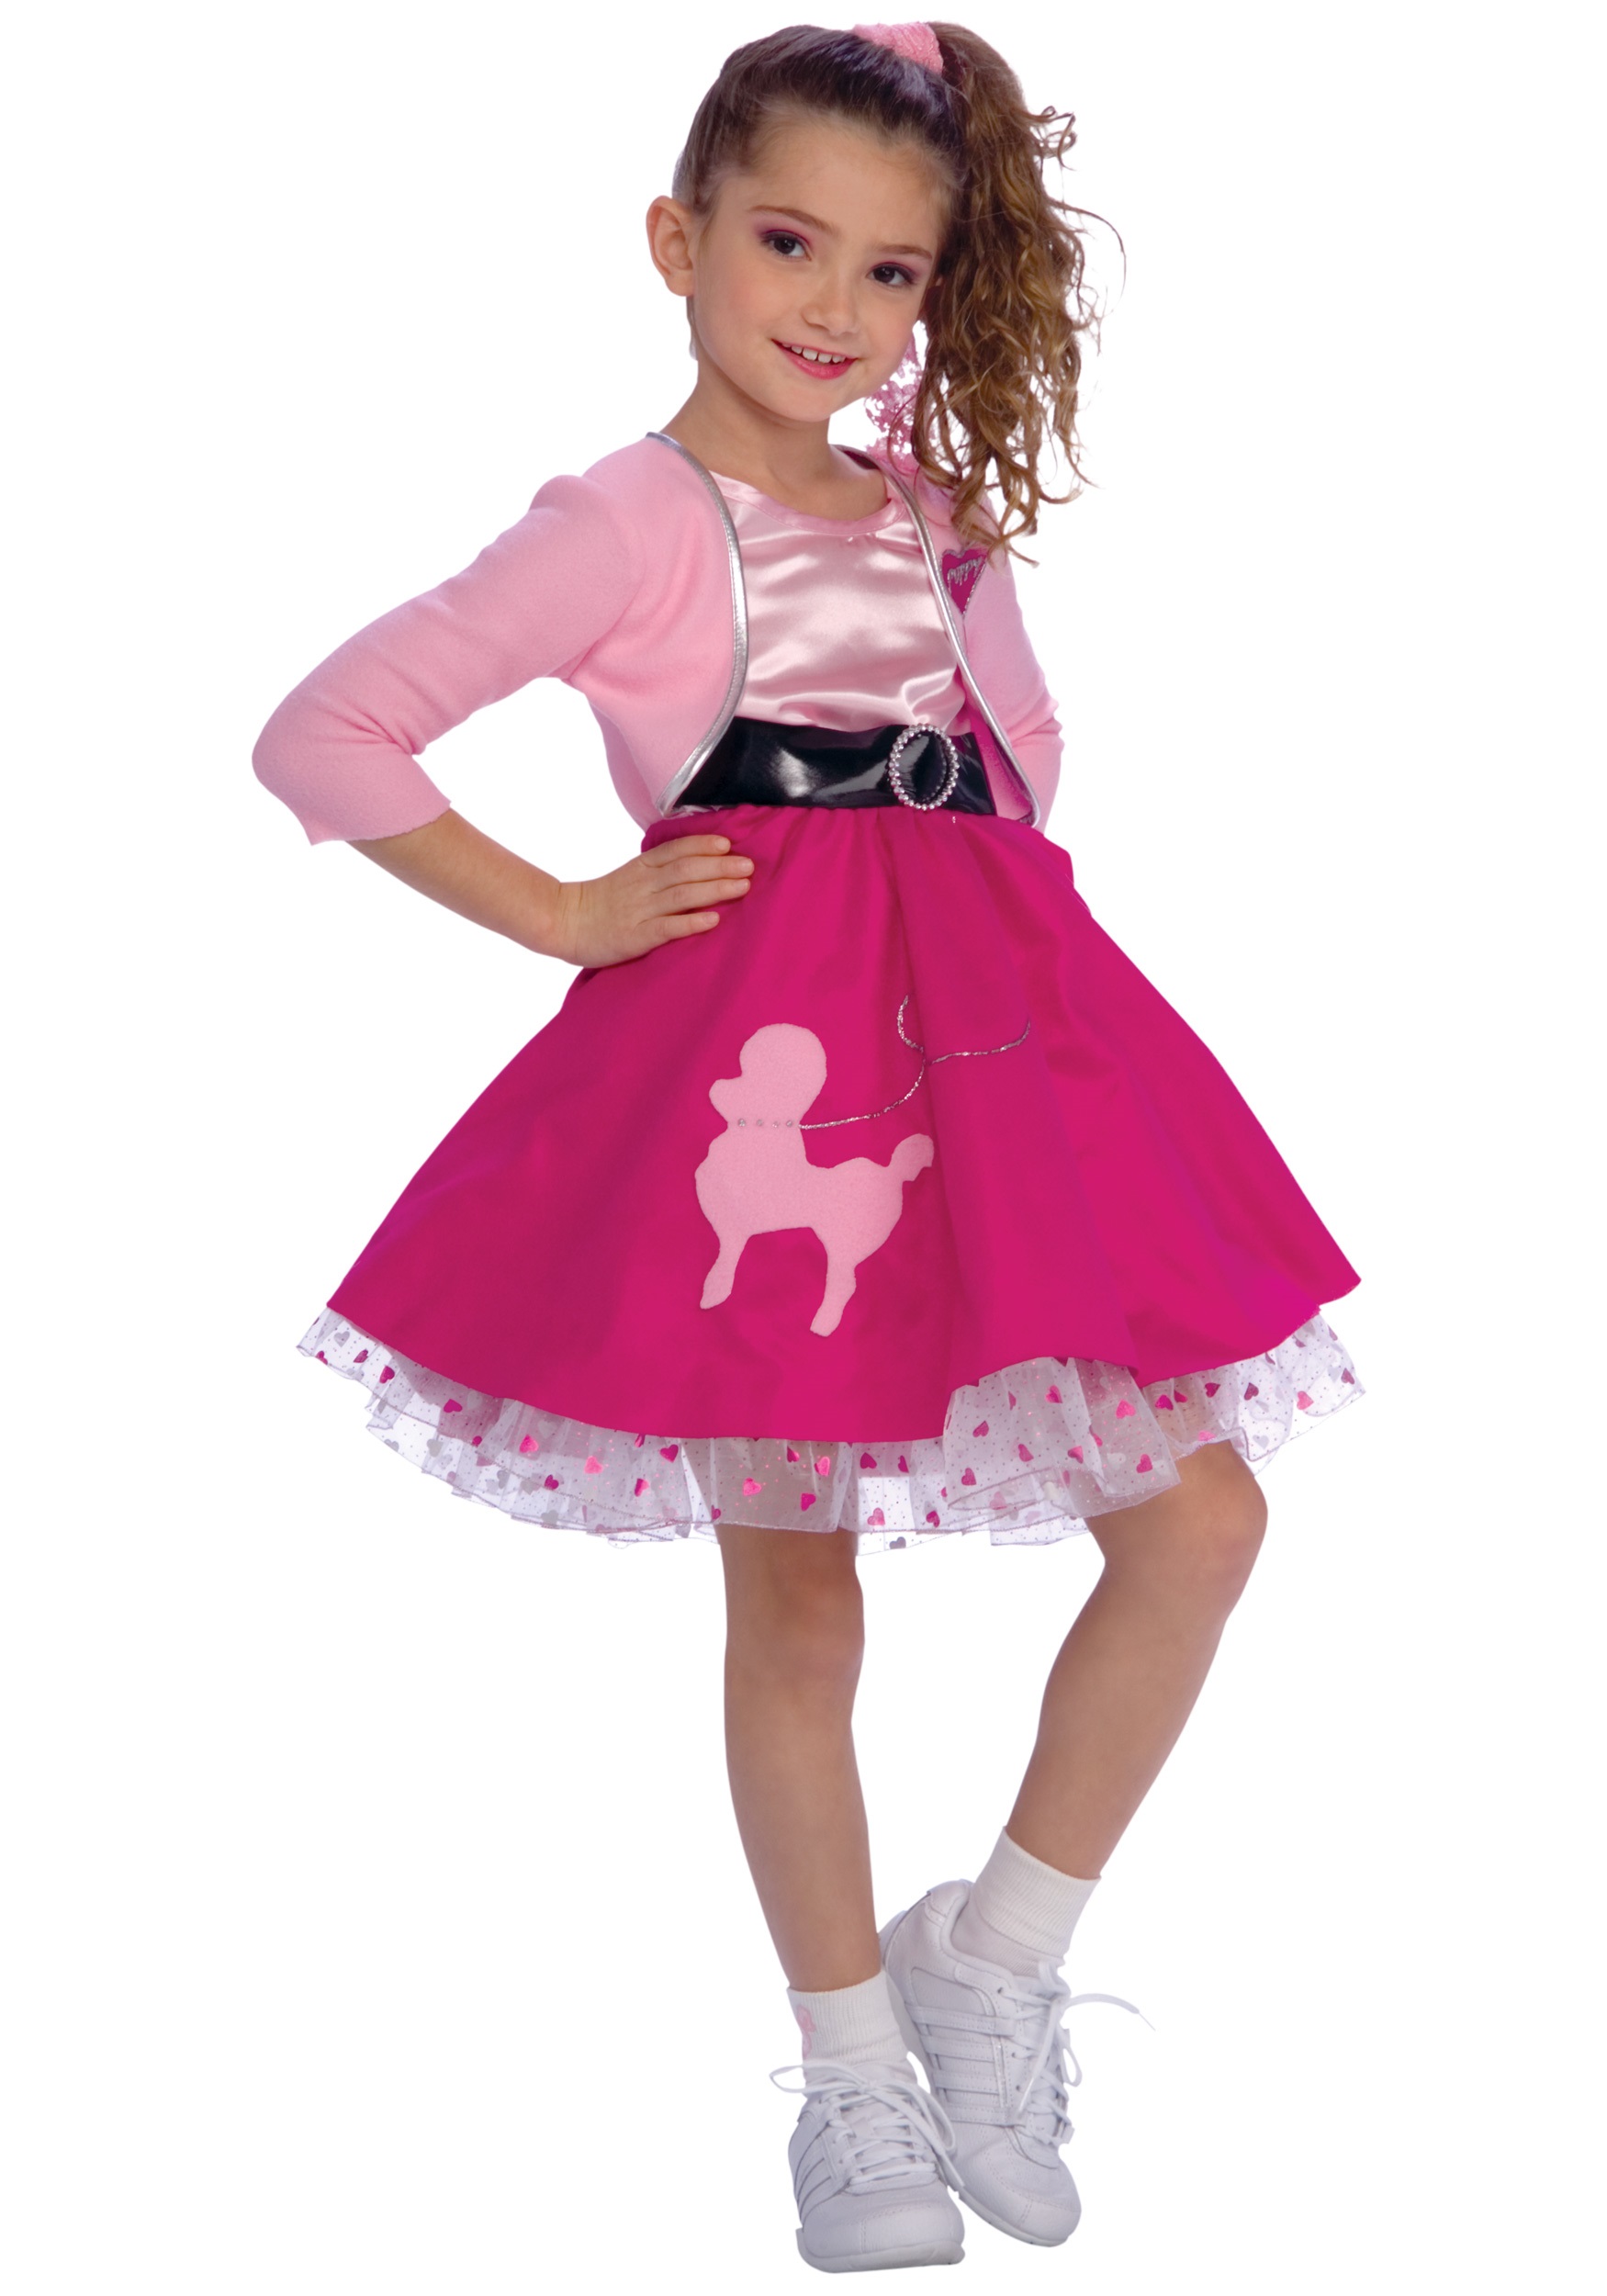 Pink Poodle Skirt Girls Costume